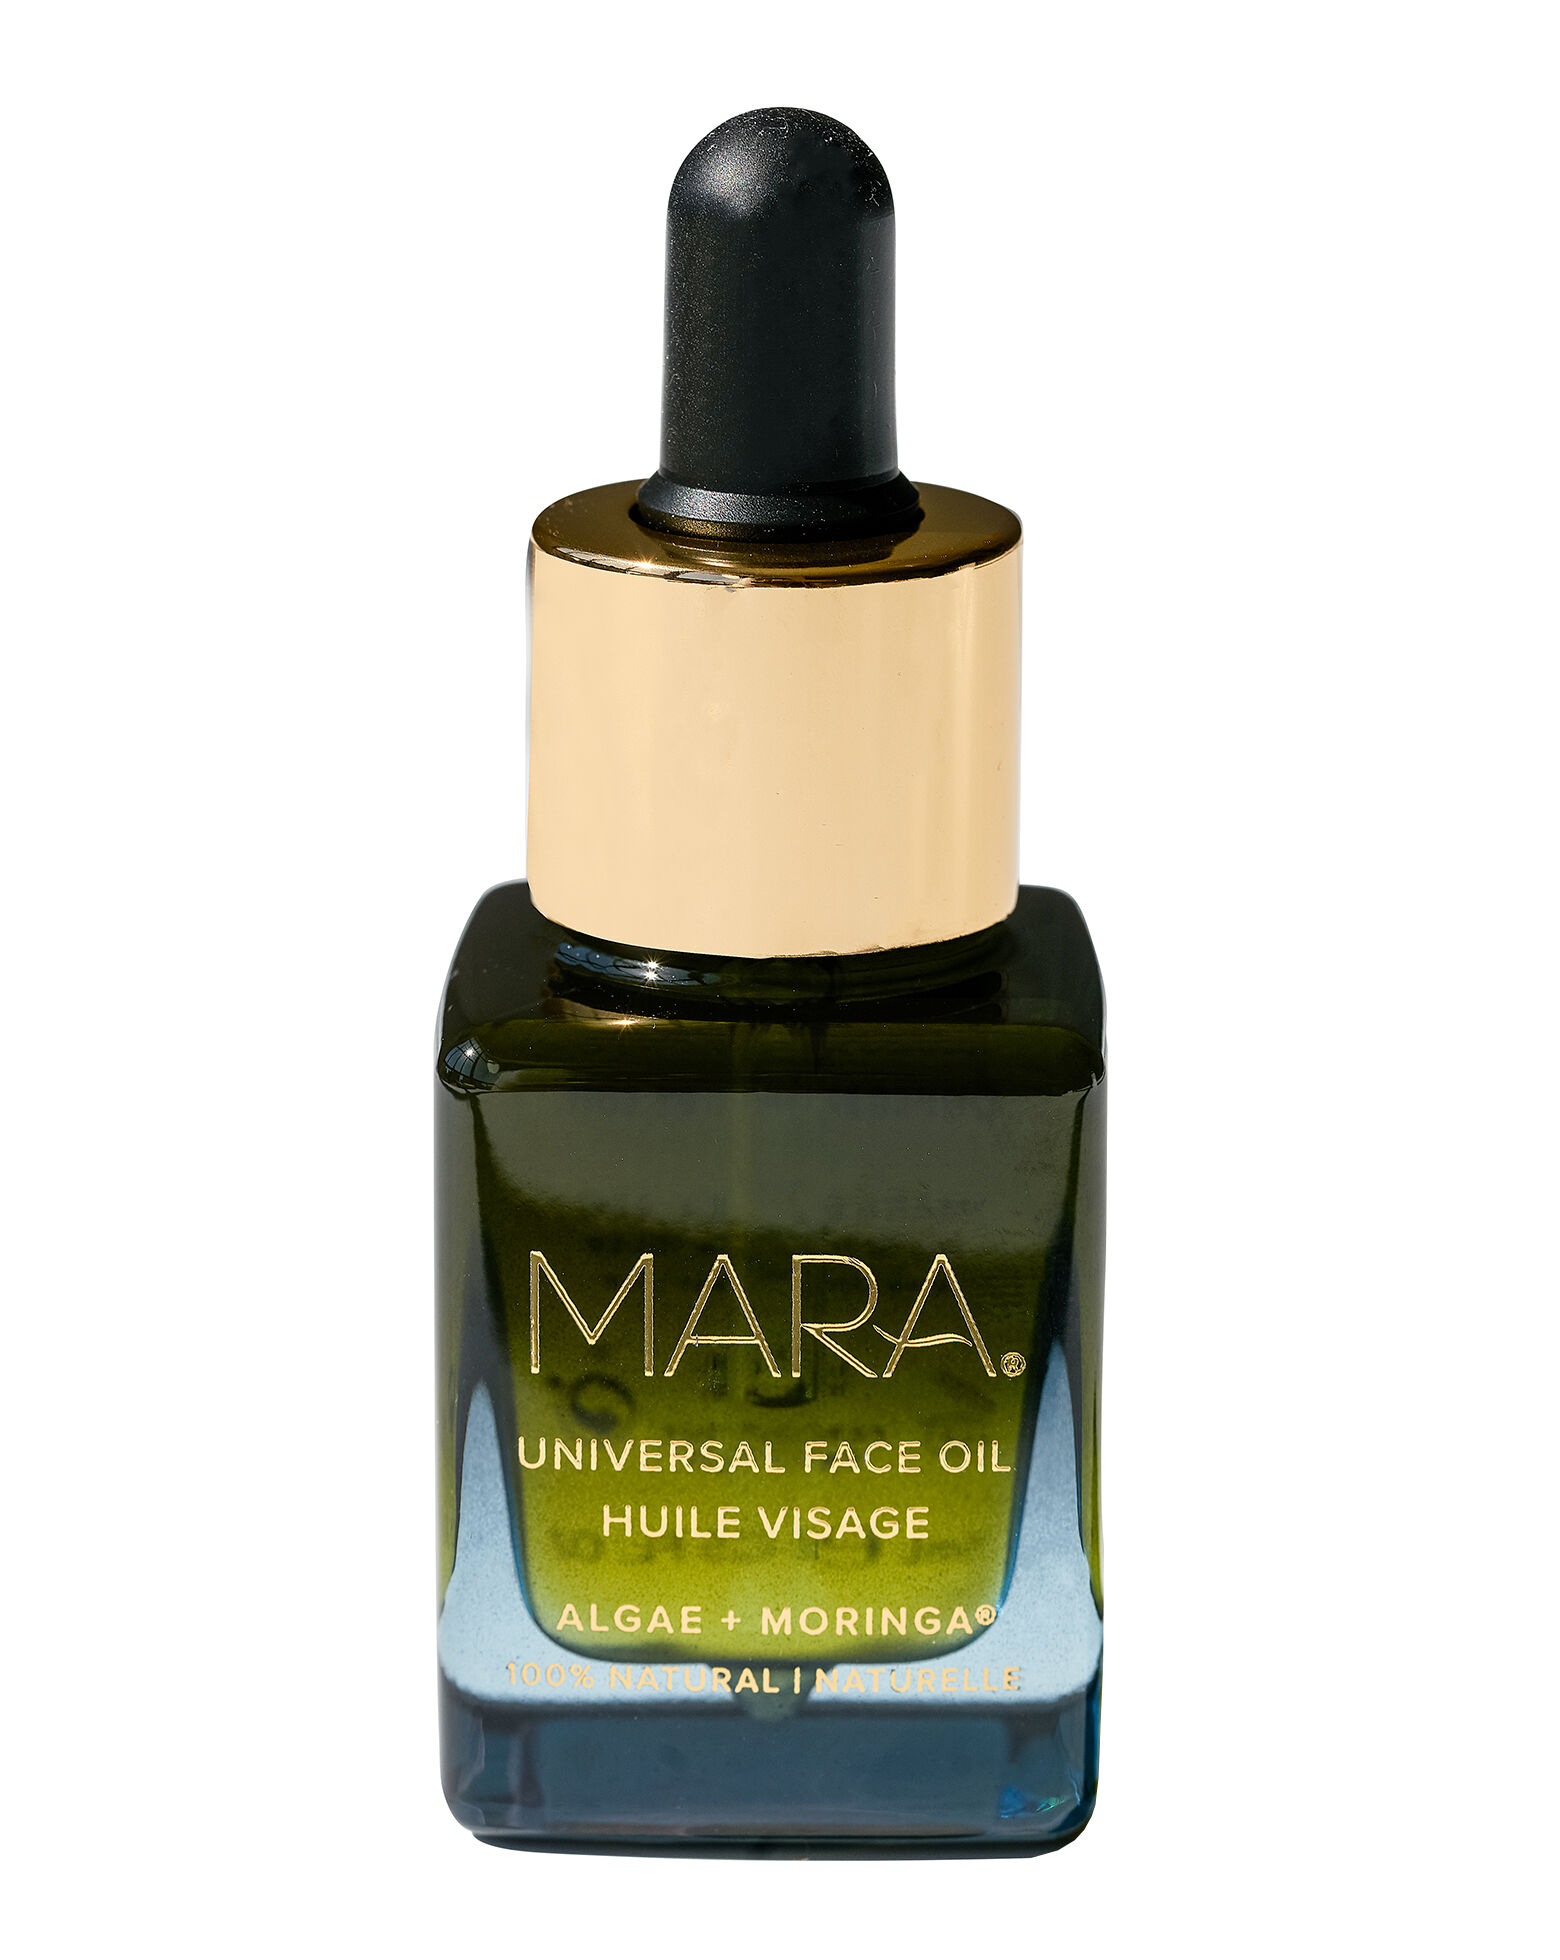 MARA - Universal Face Oil